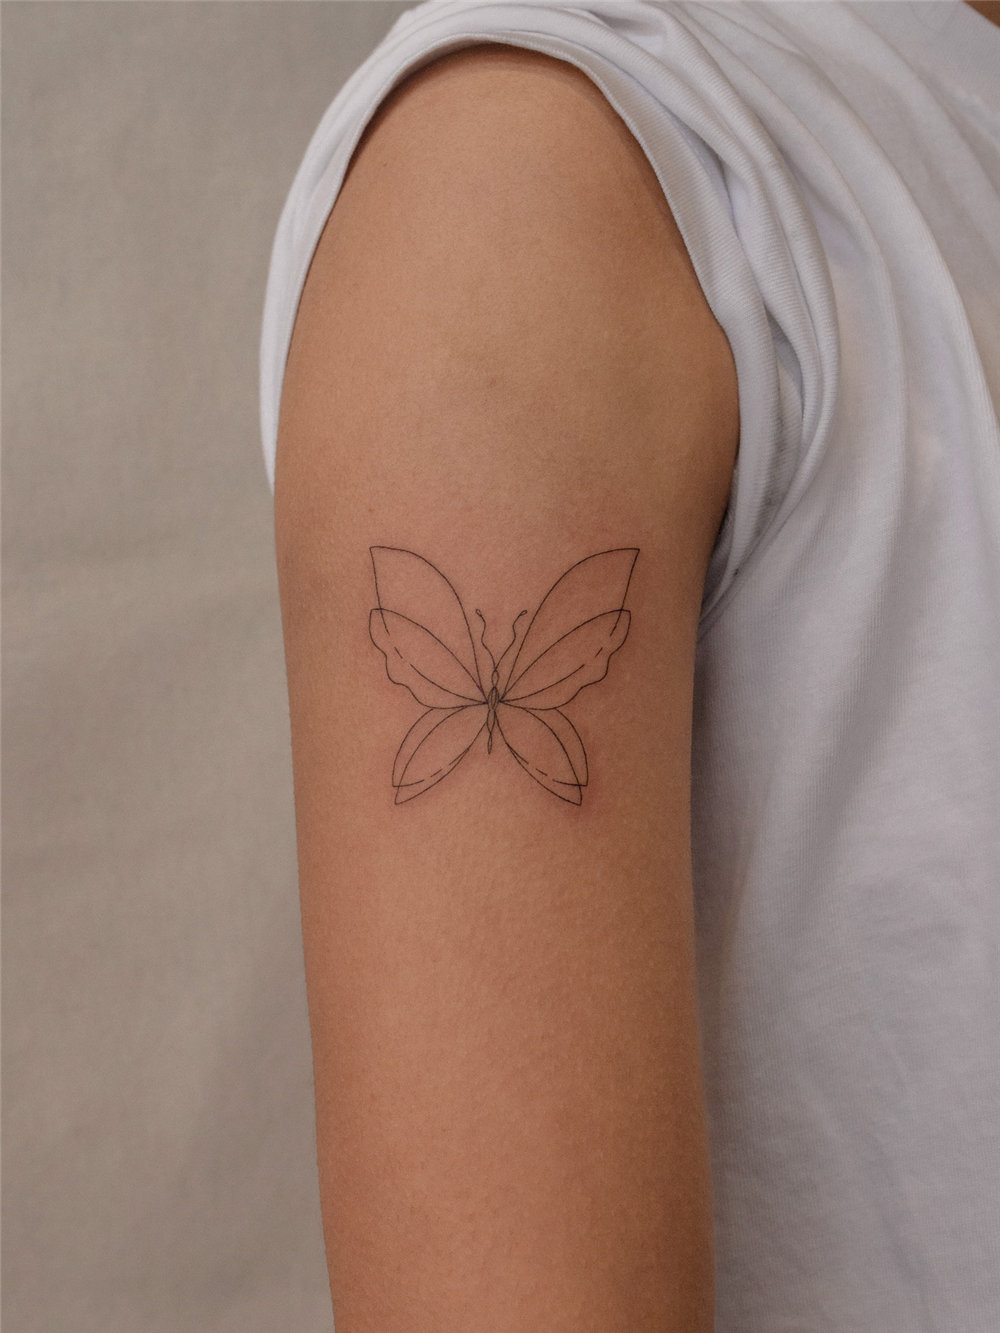 butterfly tattoos for women